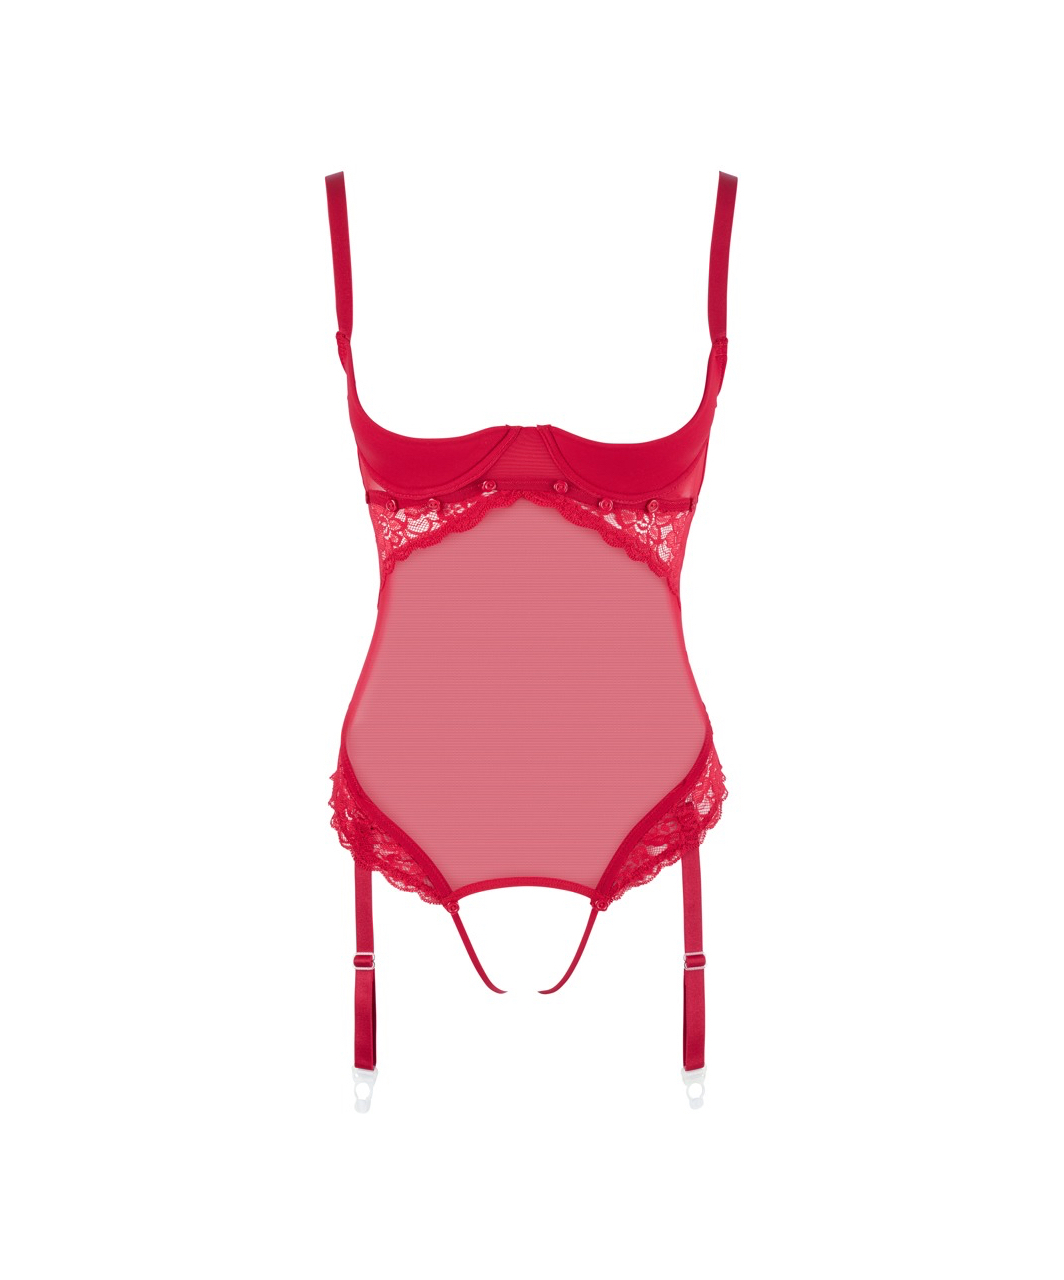 Cottelli Lingerie red mesh bodysuit with suspenders